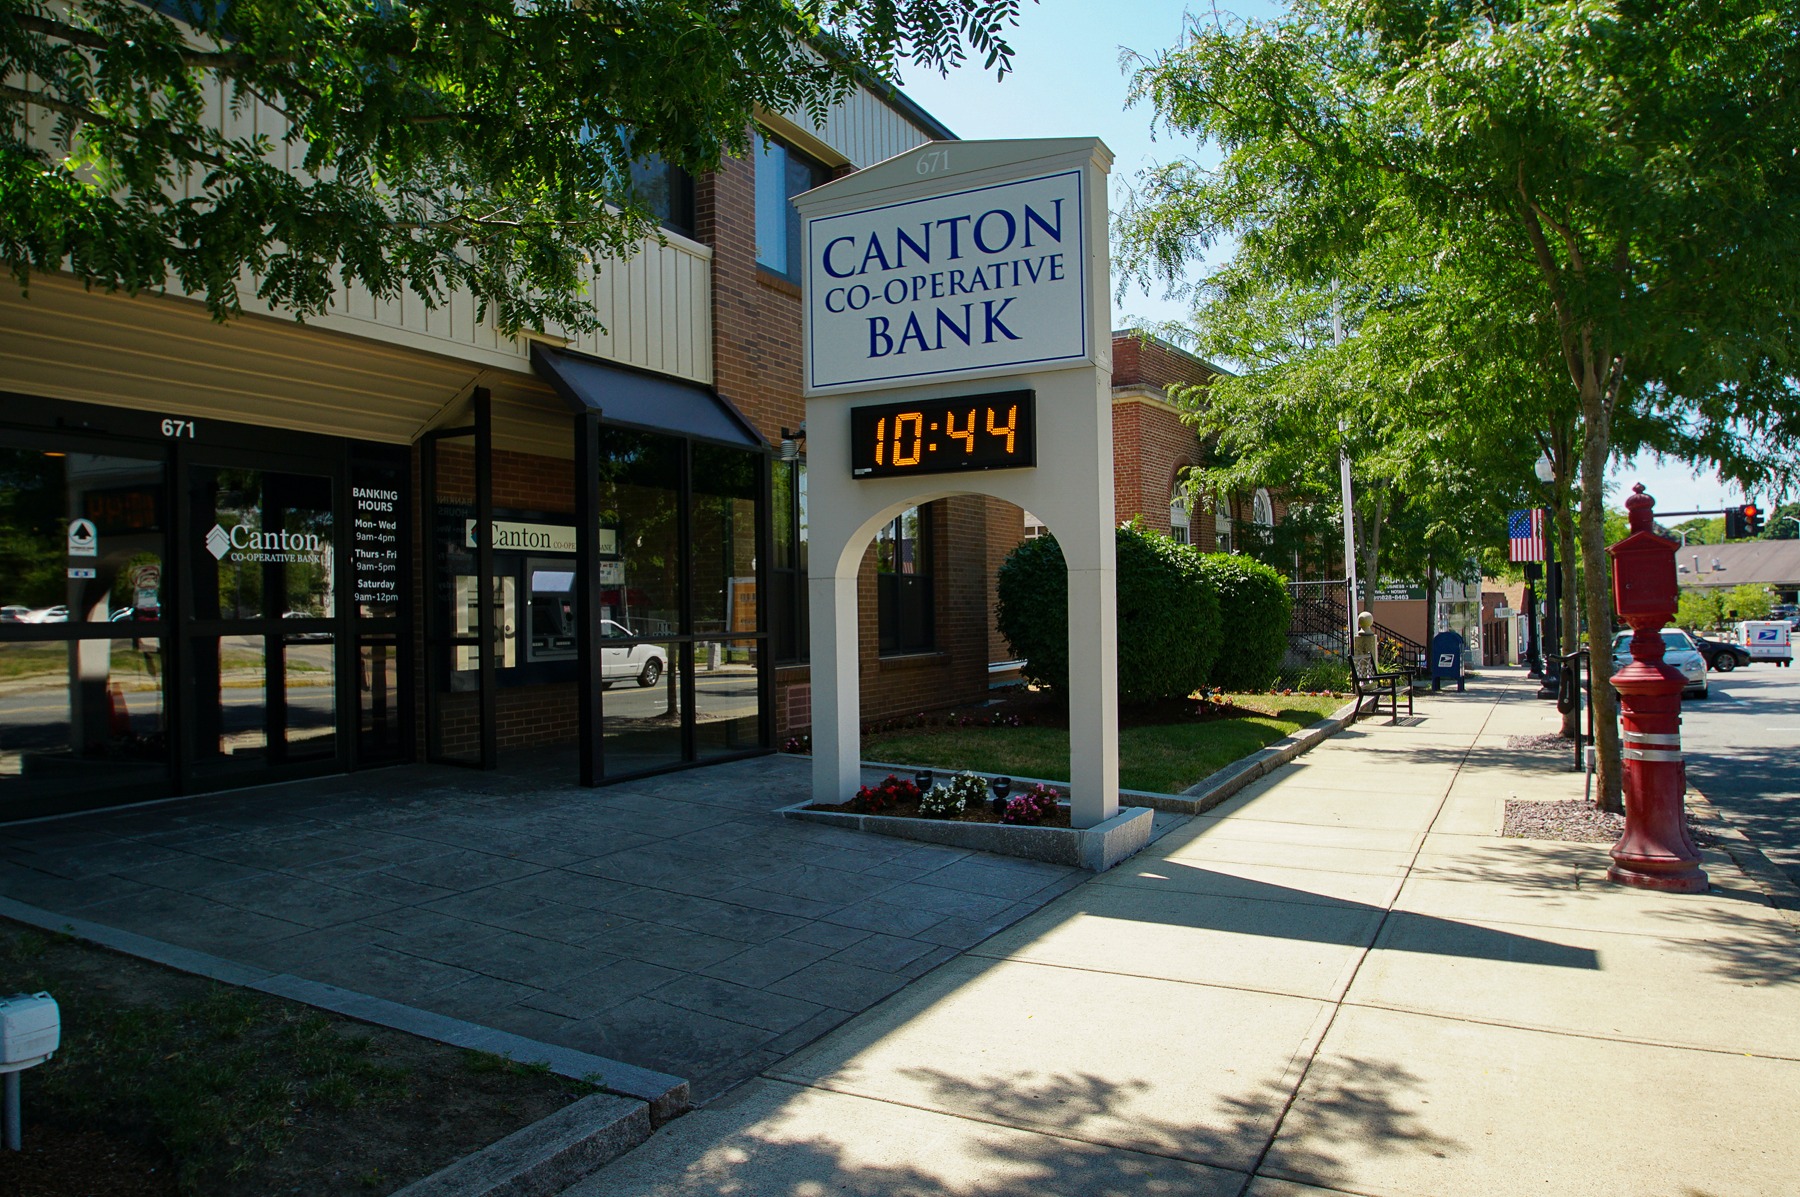 Canton Co-operative Bank | Canton Massachusetts | Since 1891